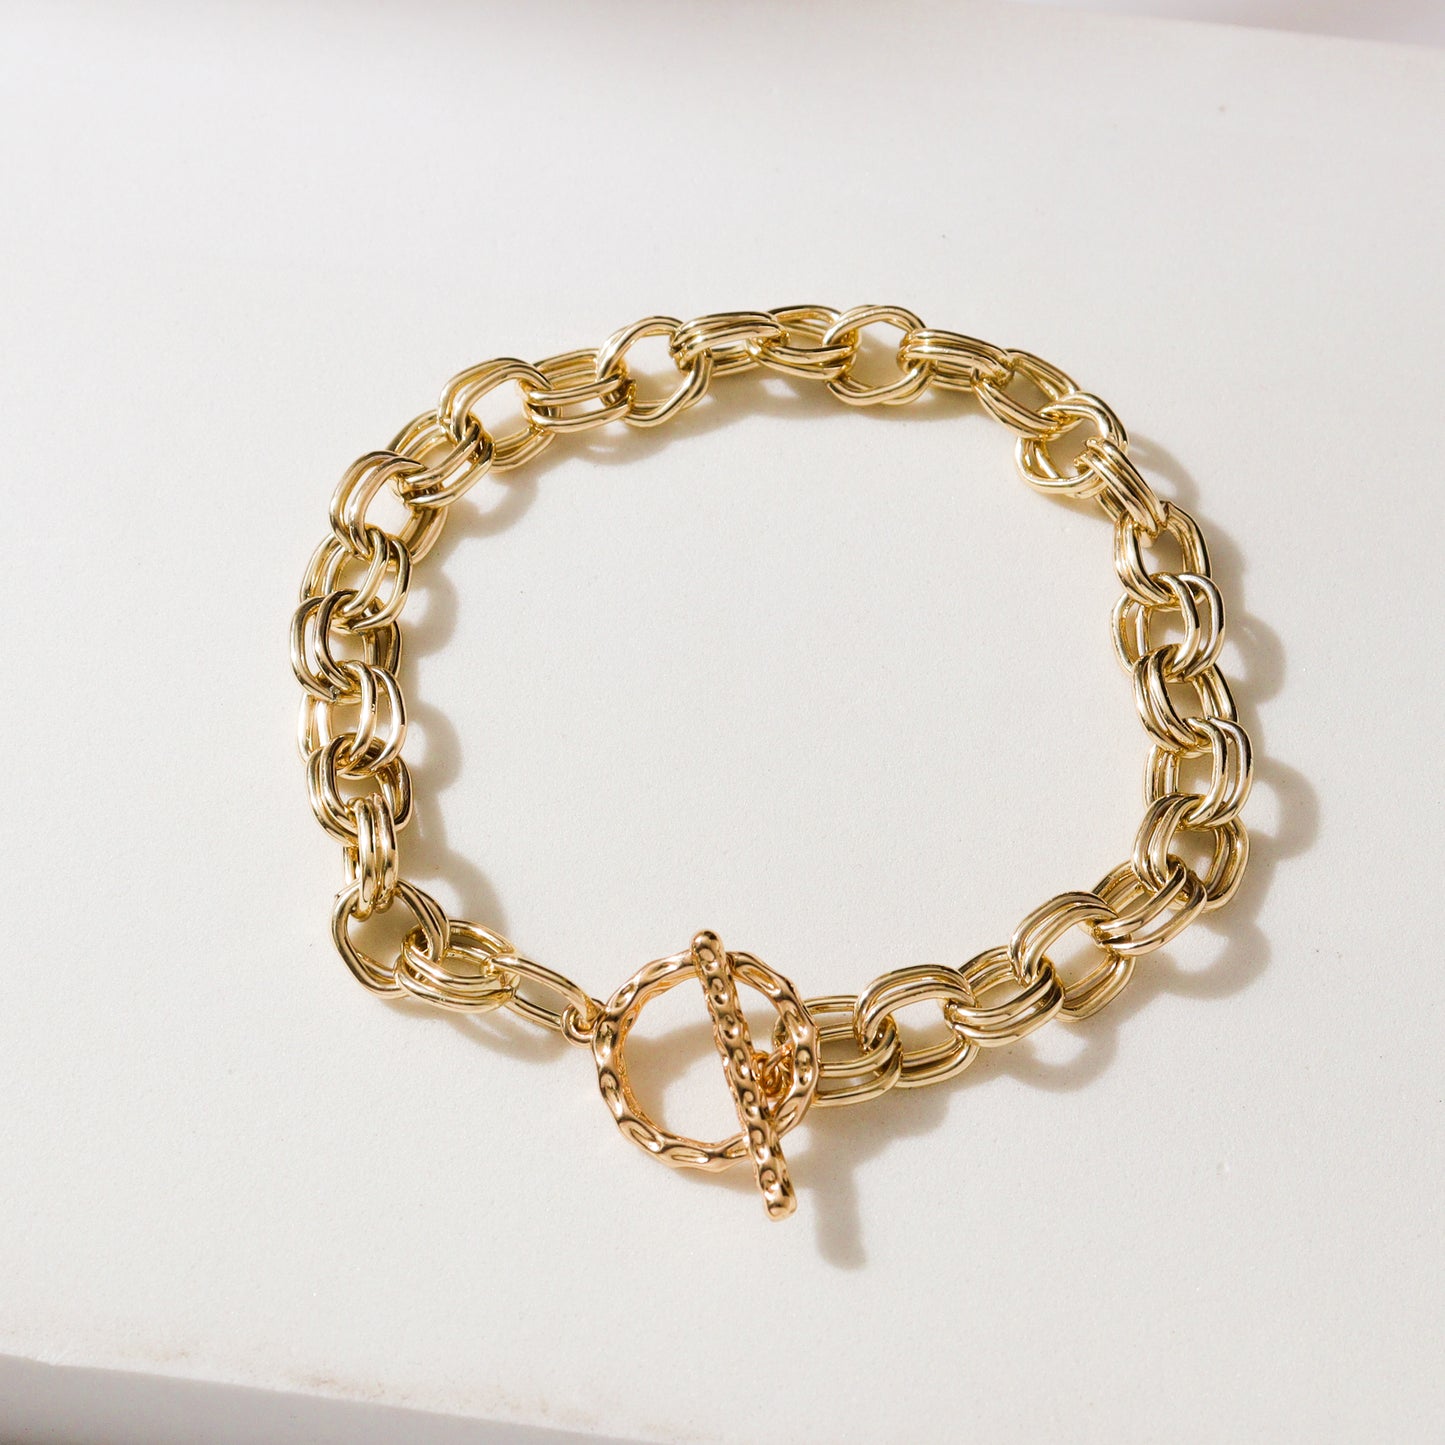 Go Wild Gold Chain Bracelet